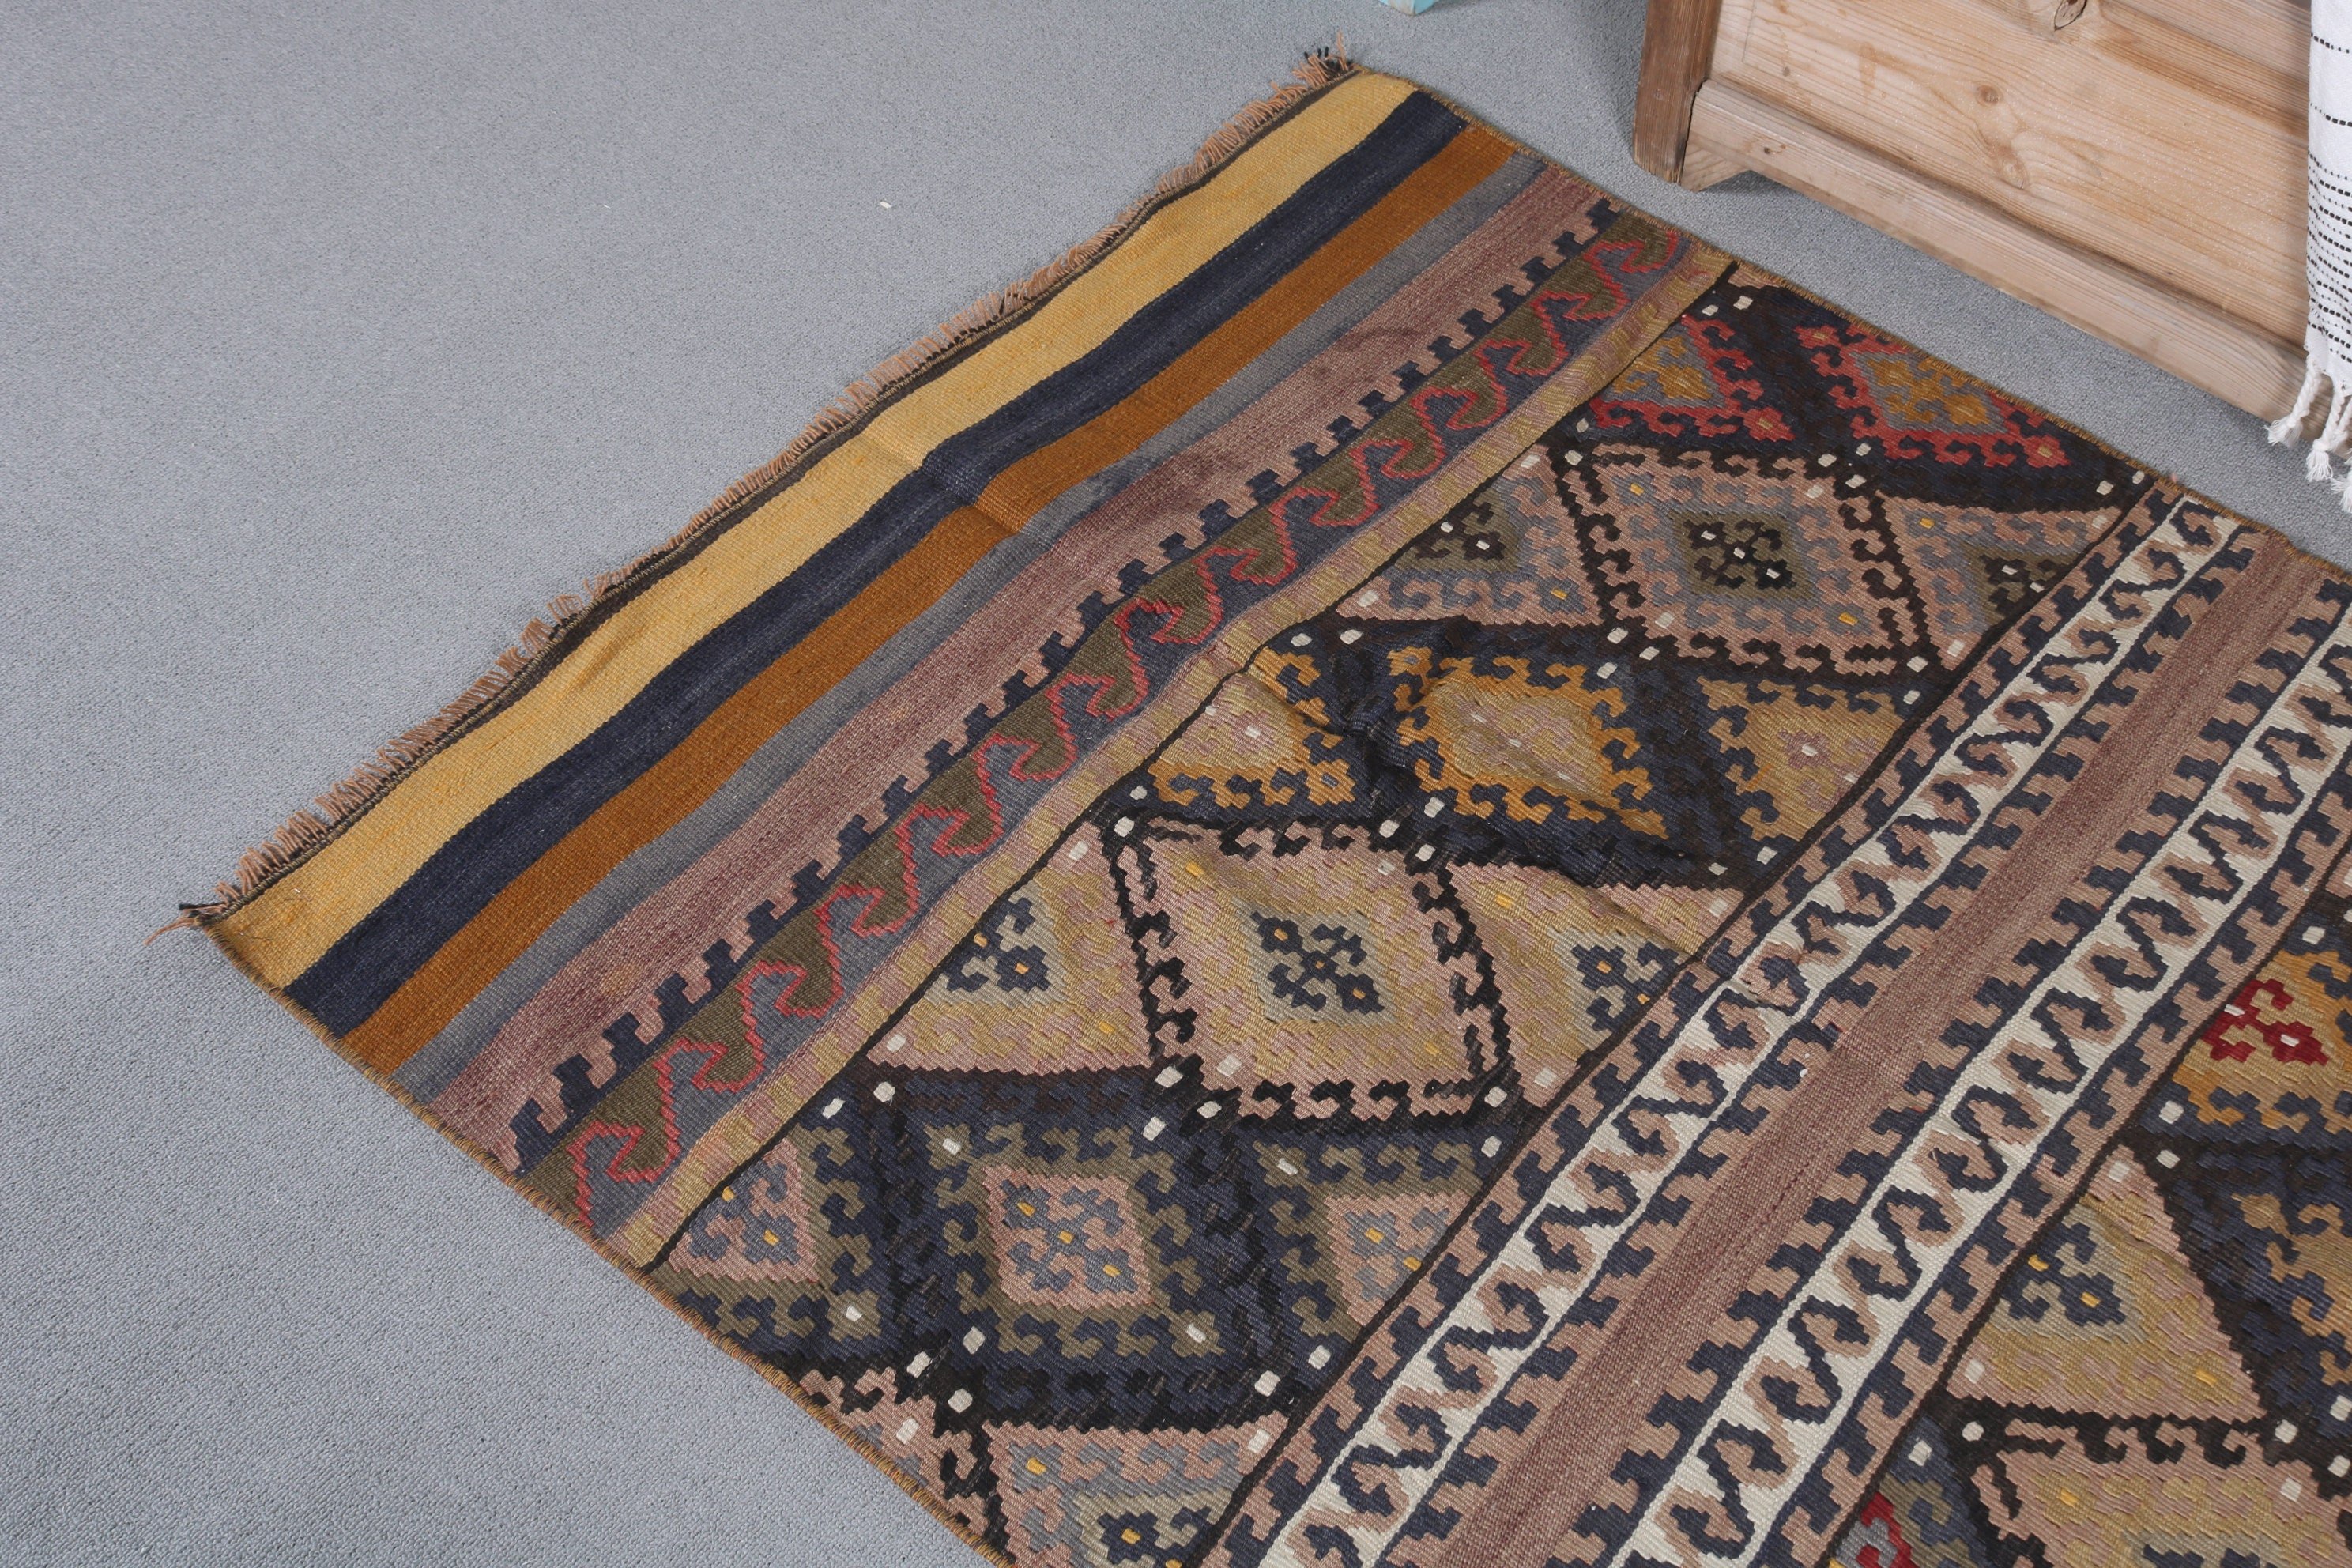 Vintage Rugs, Turkish Rug, Cool Rug, Tribal Rug, 3.3x5 ft Accent Rugs, Kilim, Entry Rug, Yellow Anatolian Rug, Oushak Rugs, Bedroom Rugs